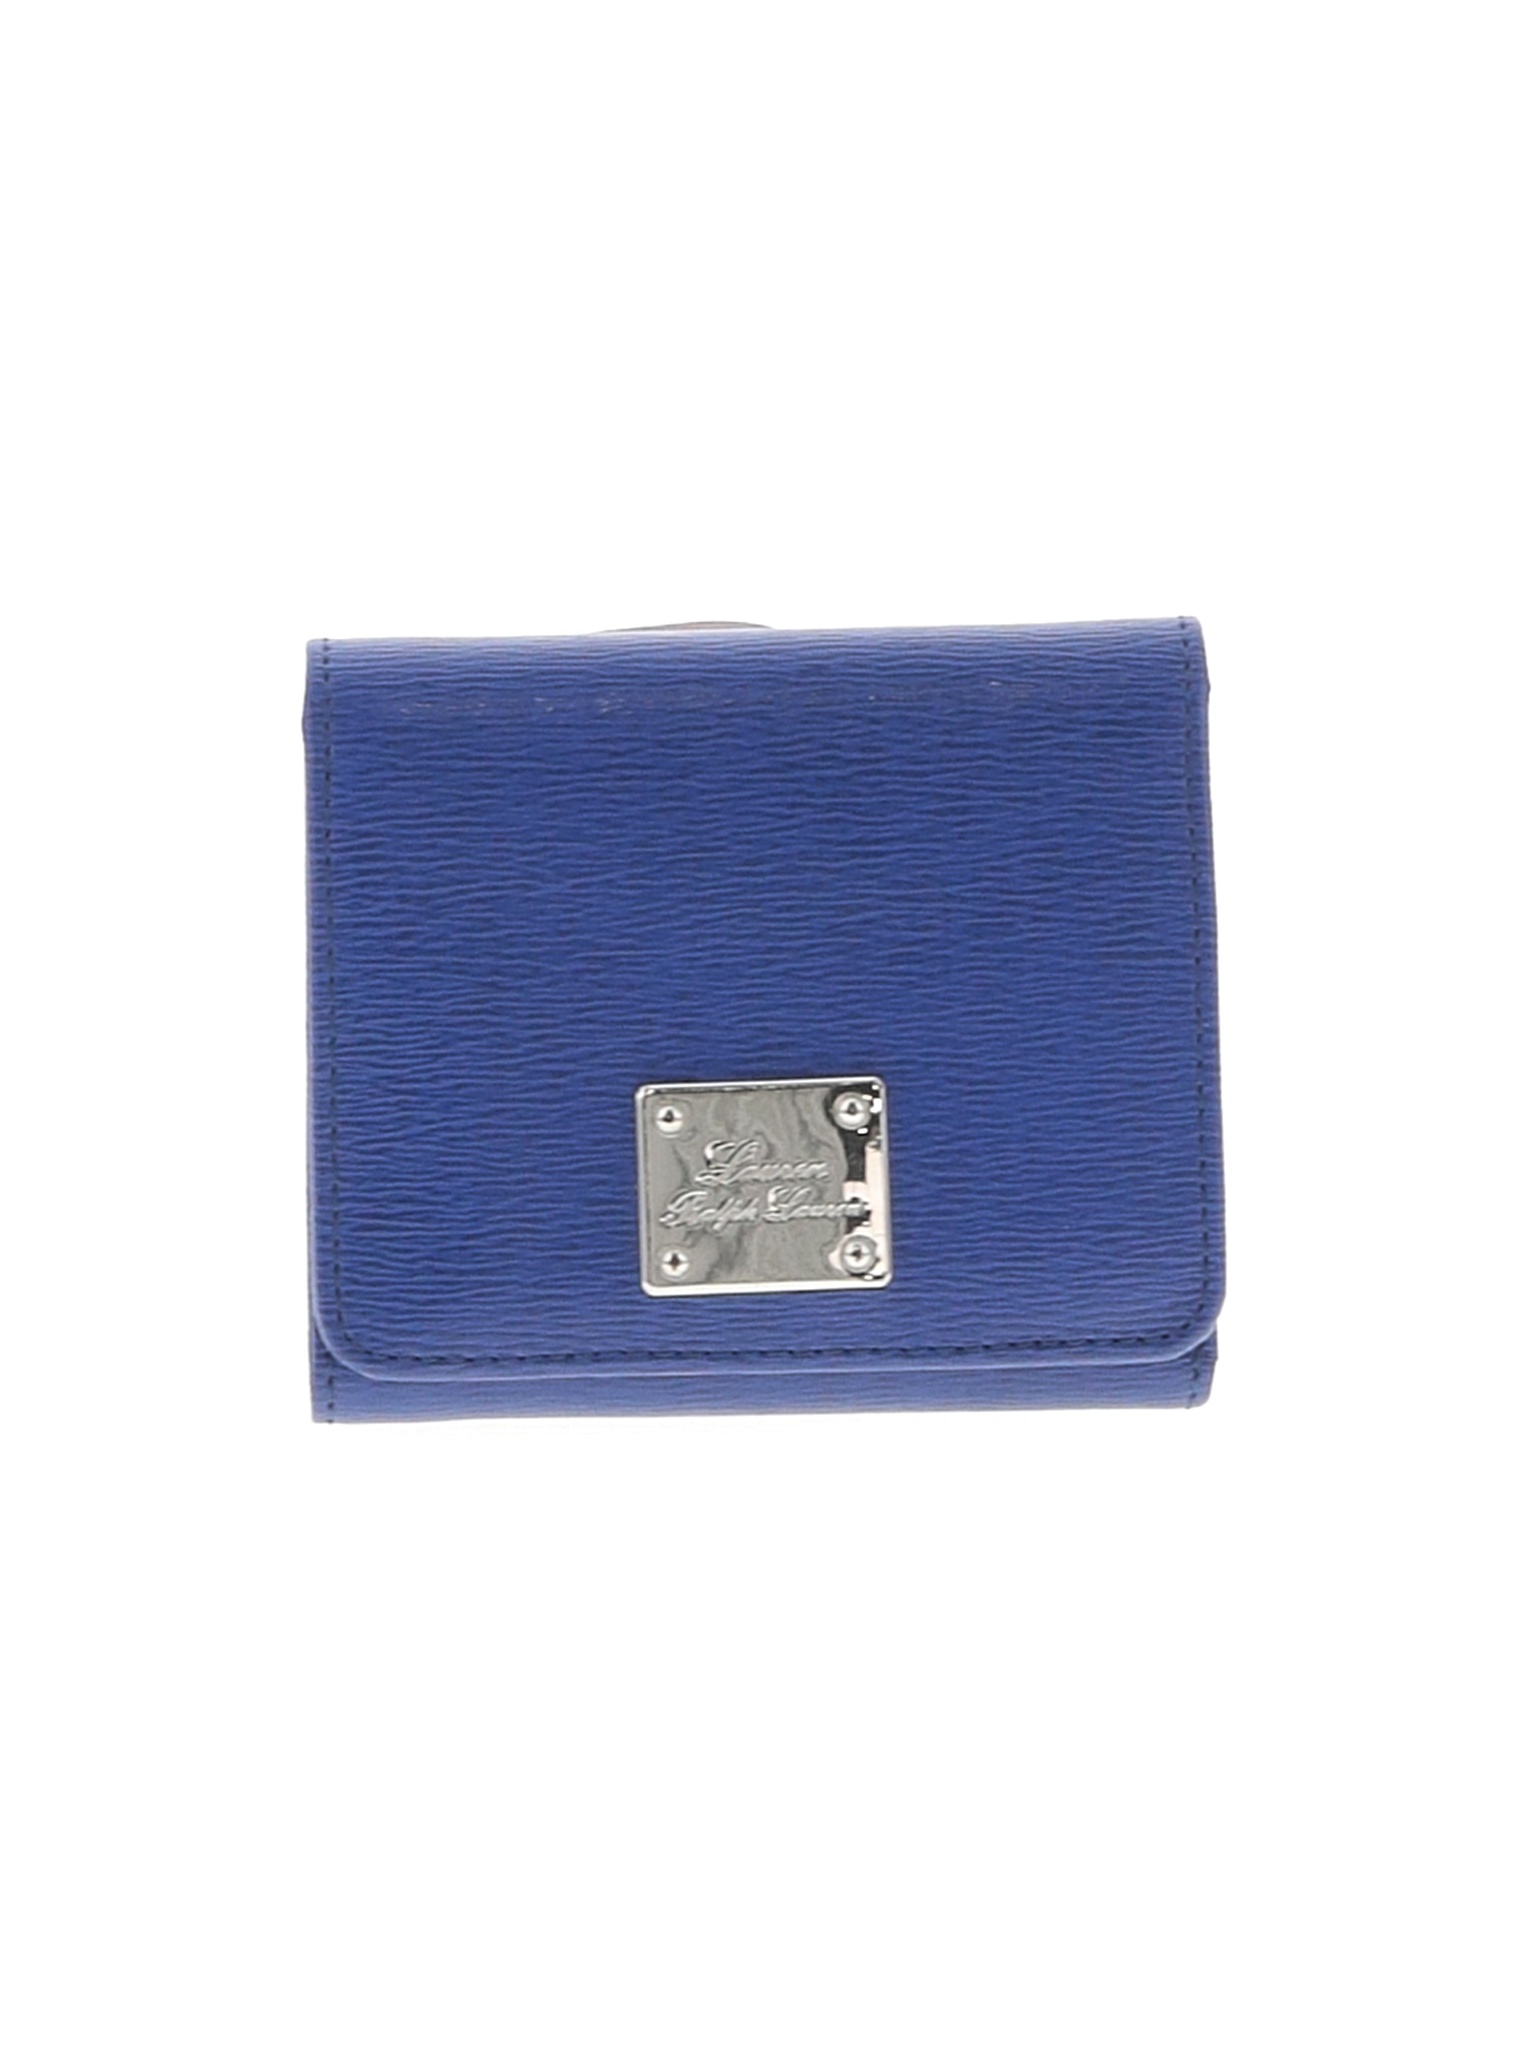 Lauren by Ralph Lauren Women Blue Wallet One Size | eBay